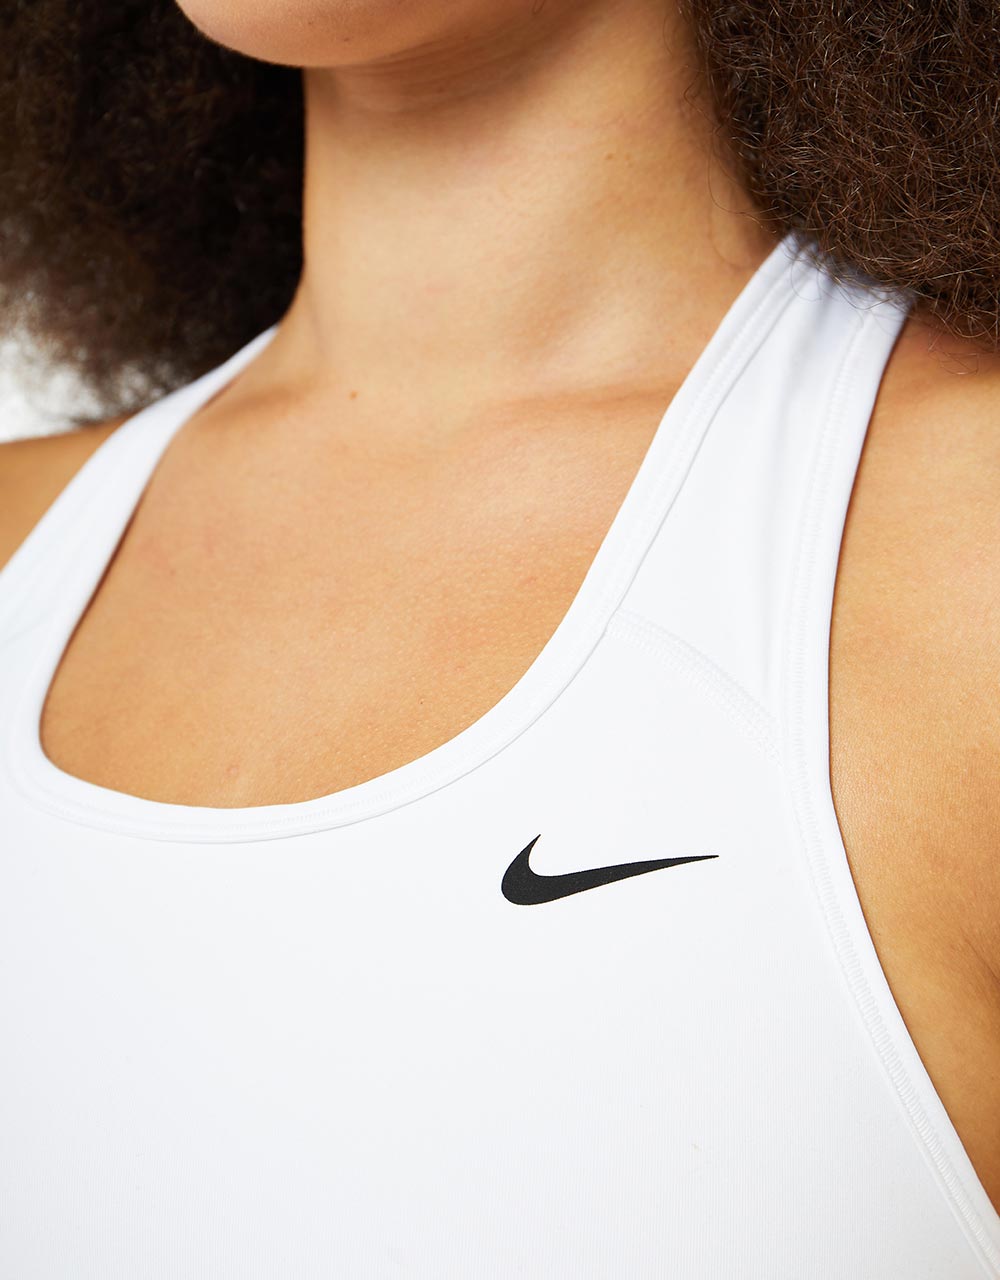 Nike Gray Sports Bra Size M - 66% off